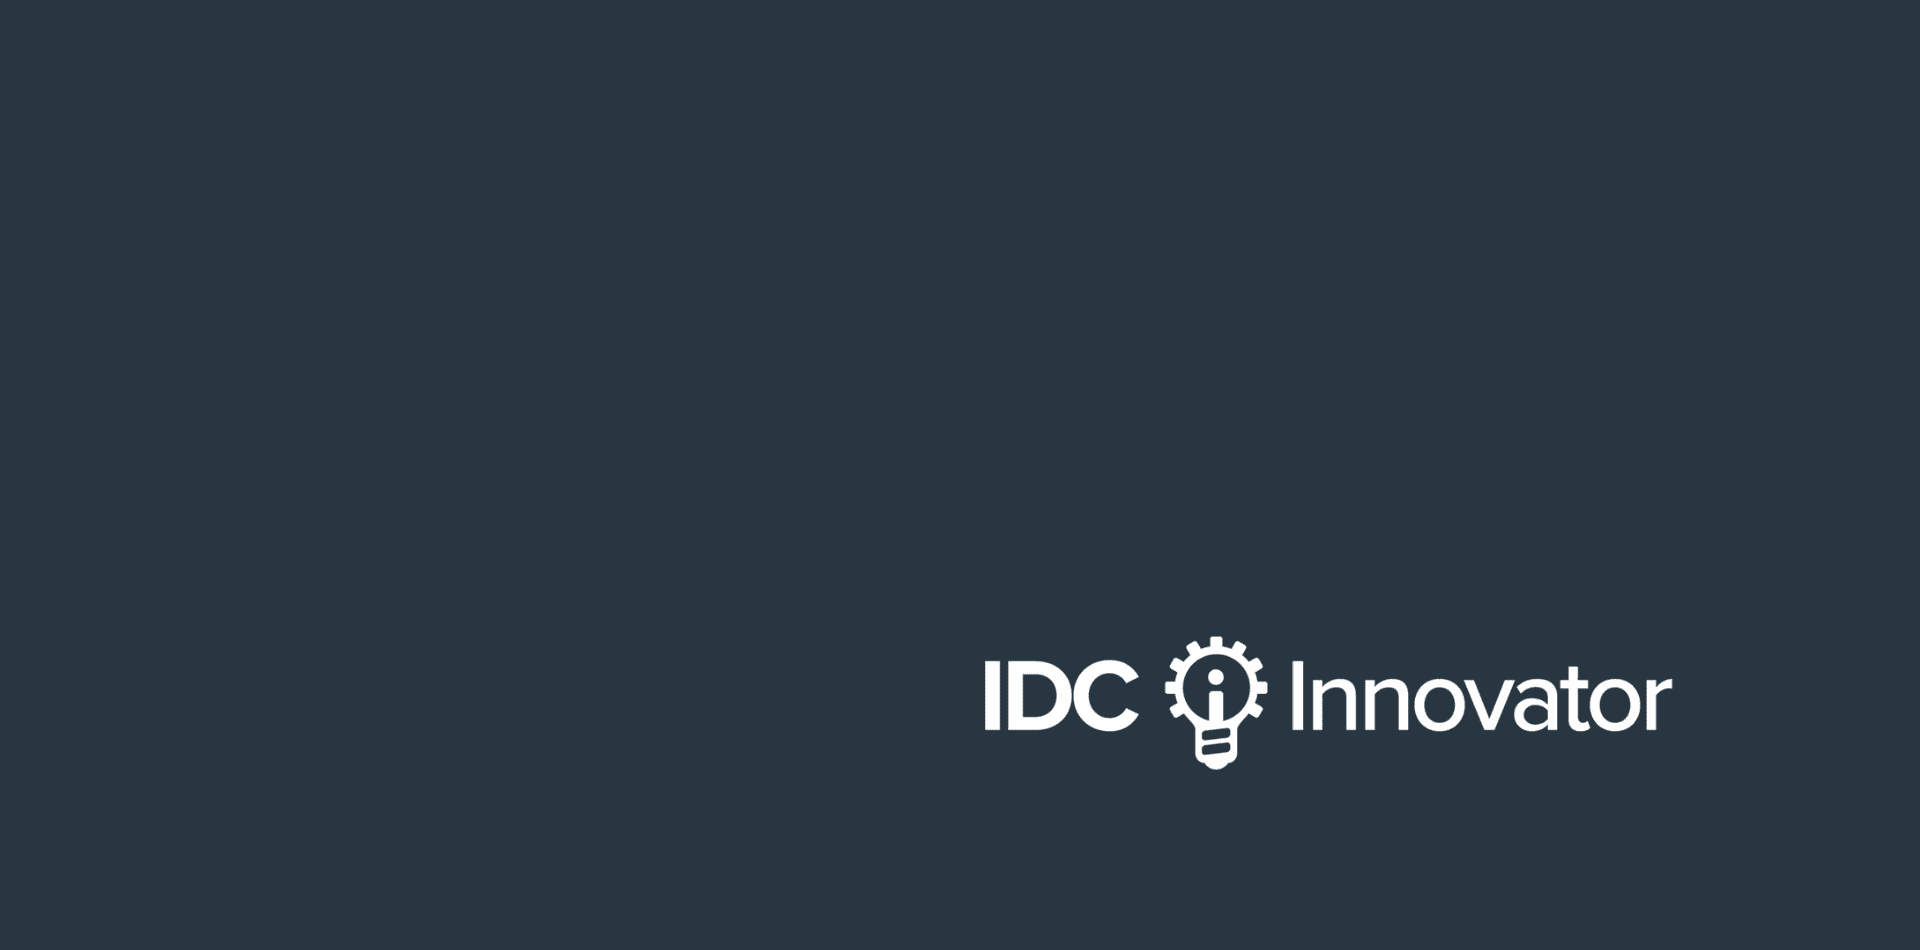 IDC Innovator logo